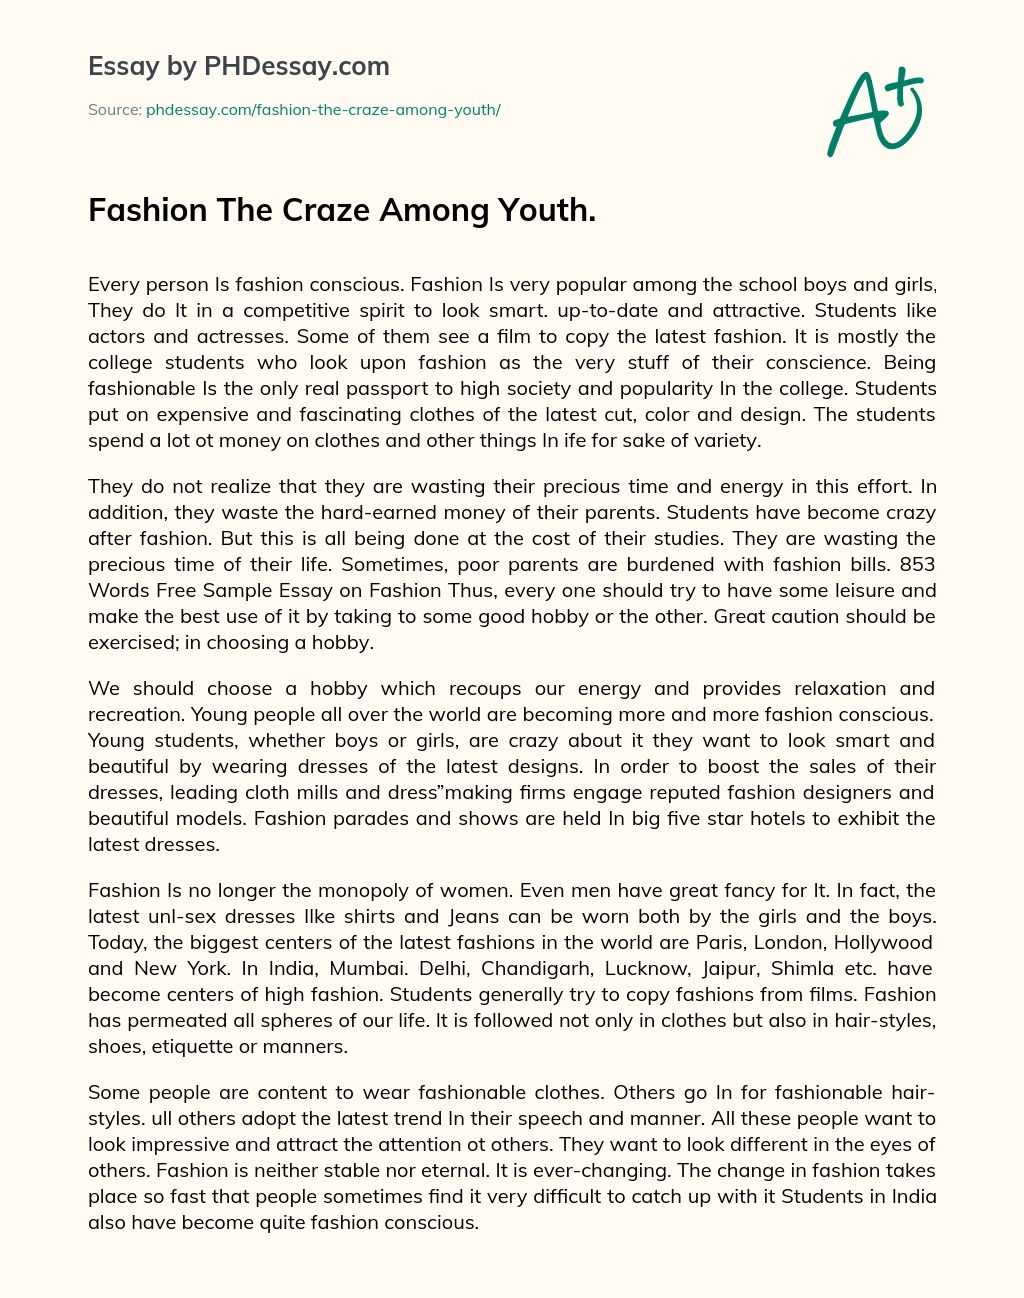 fashion among youth essay